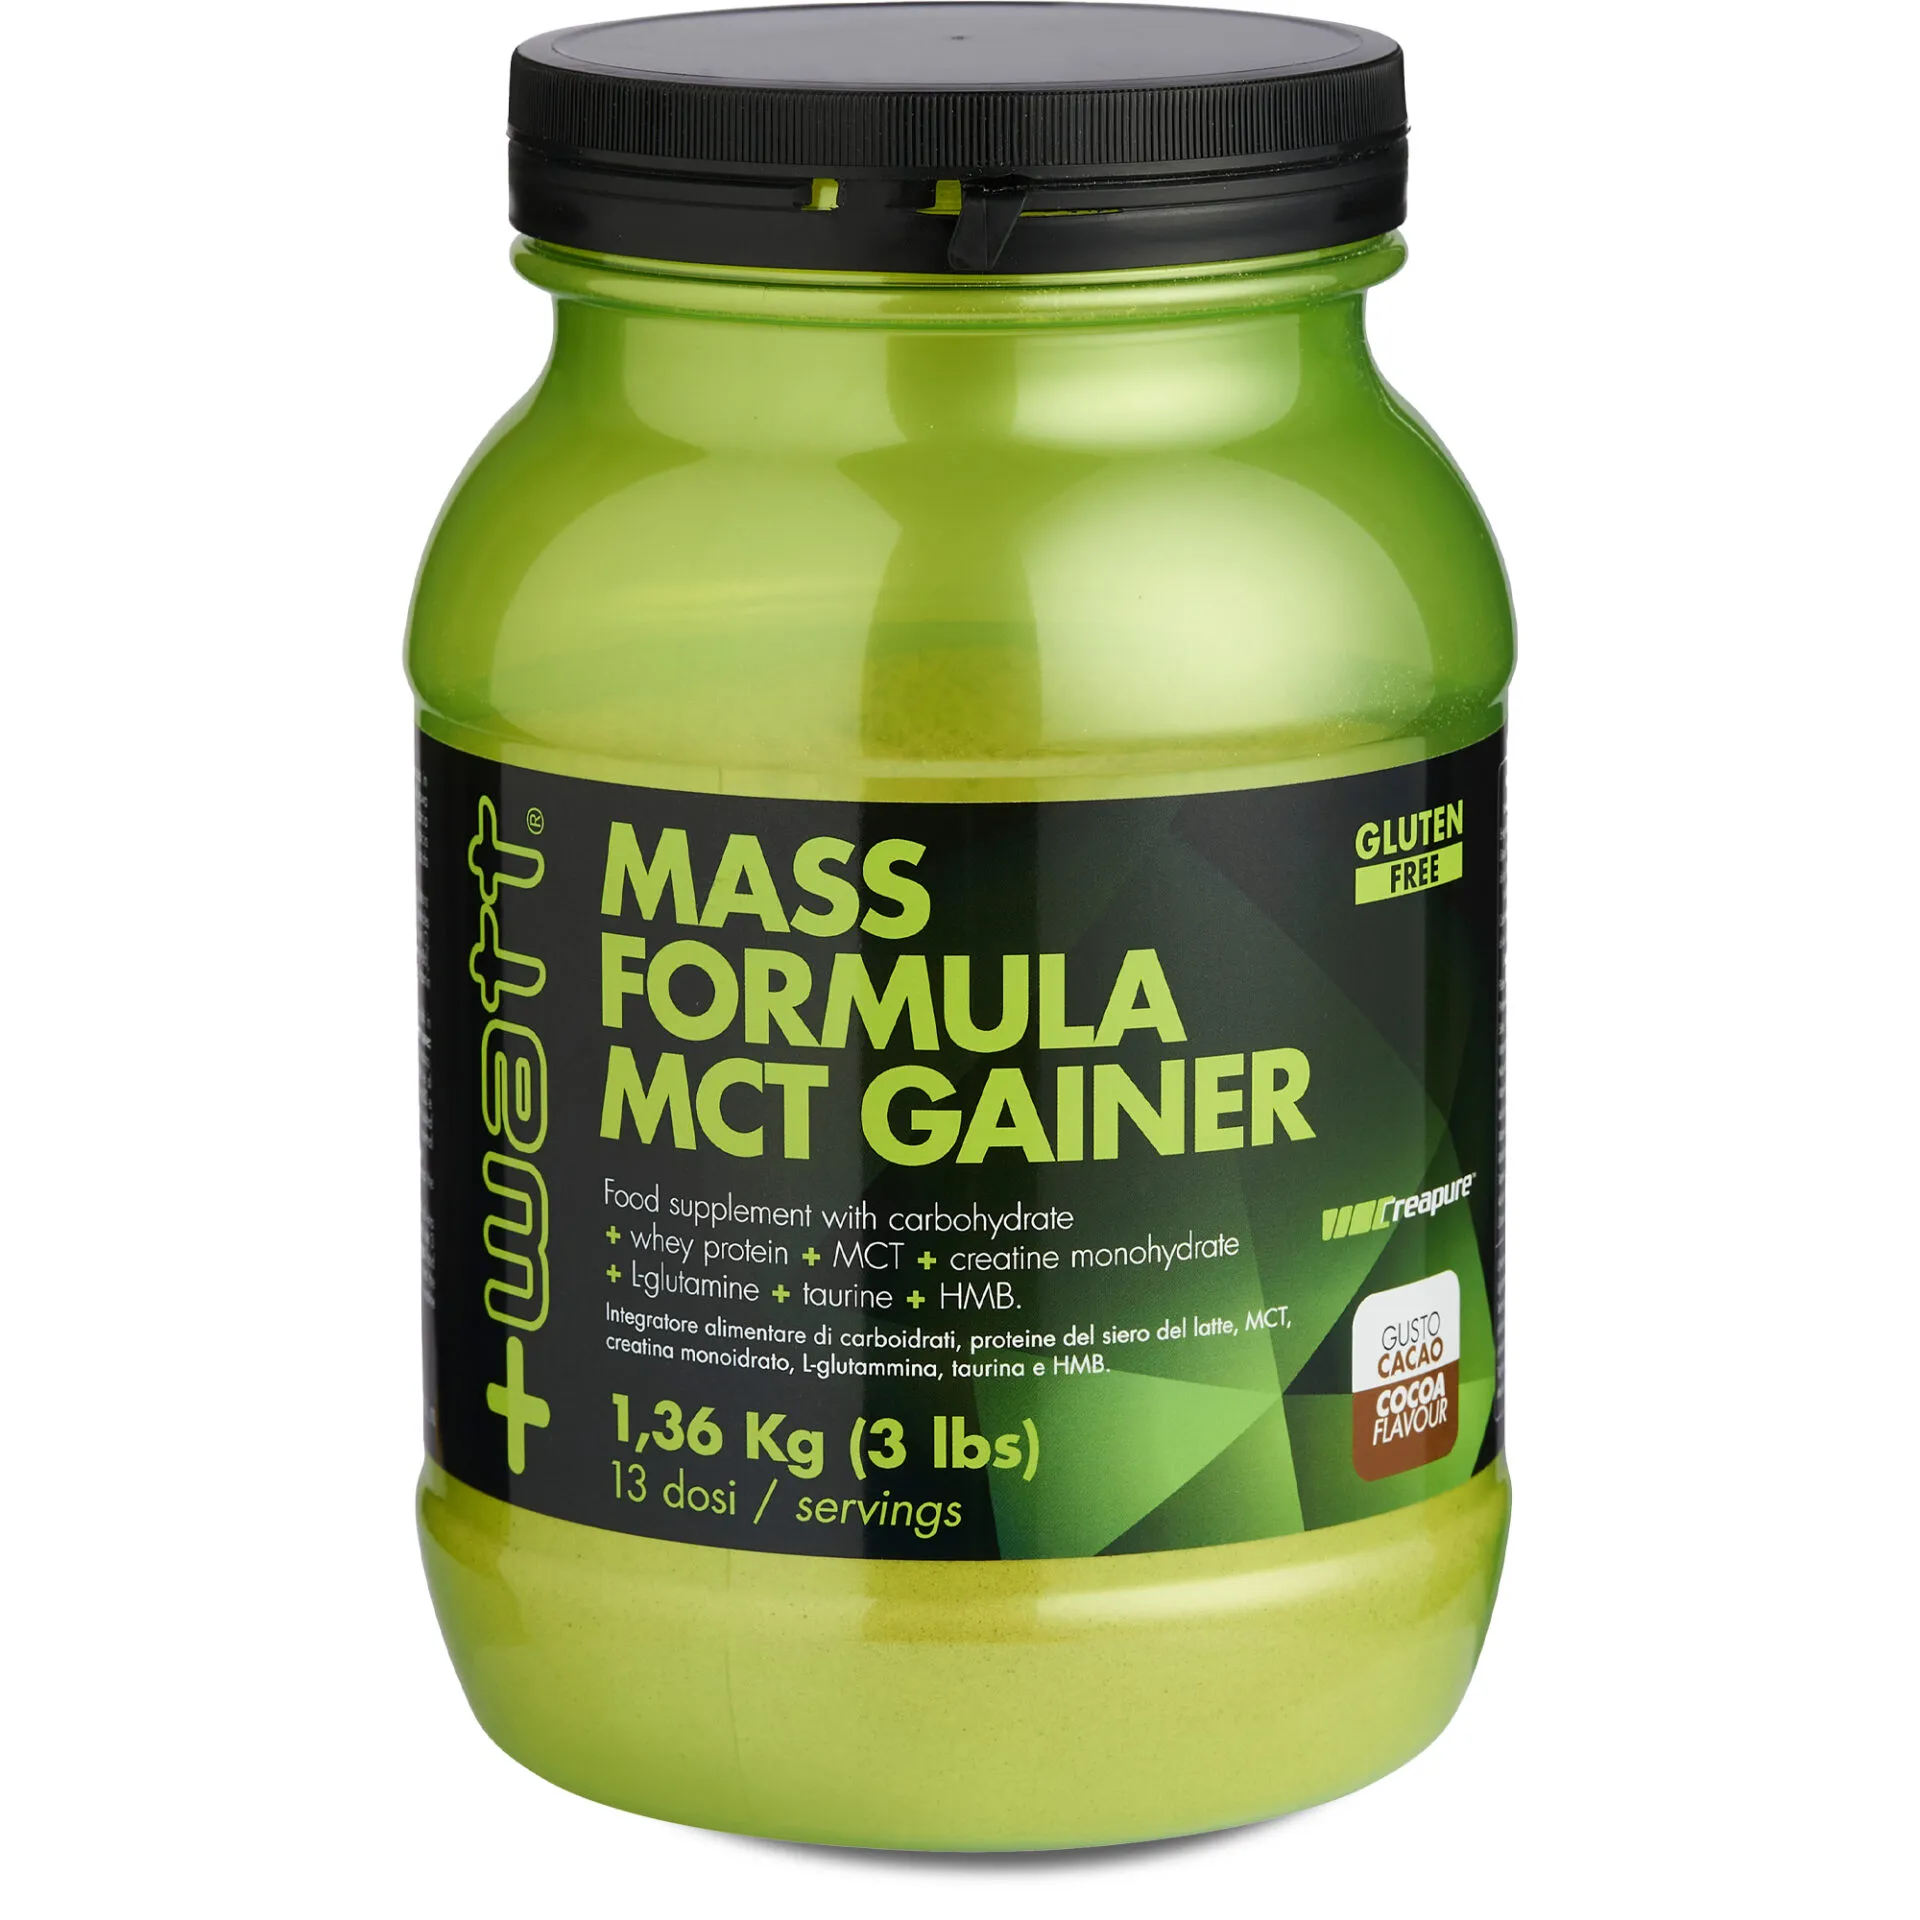 Mass Formula MCT Gainer 3lbs